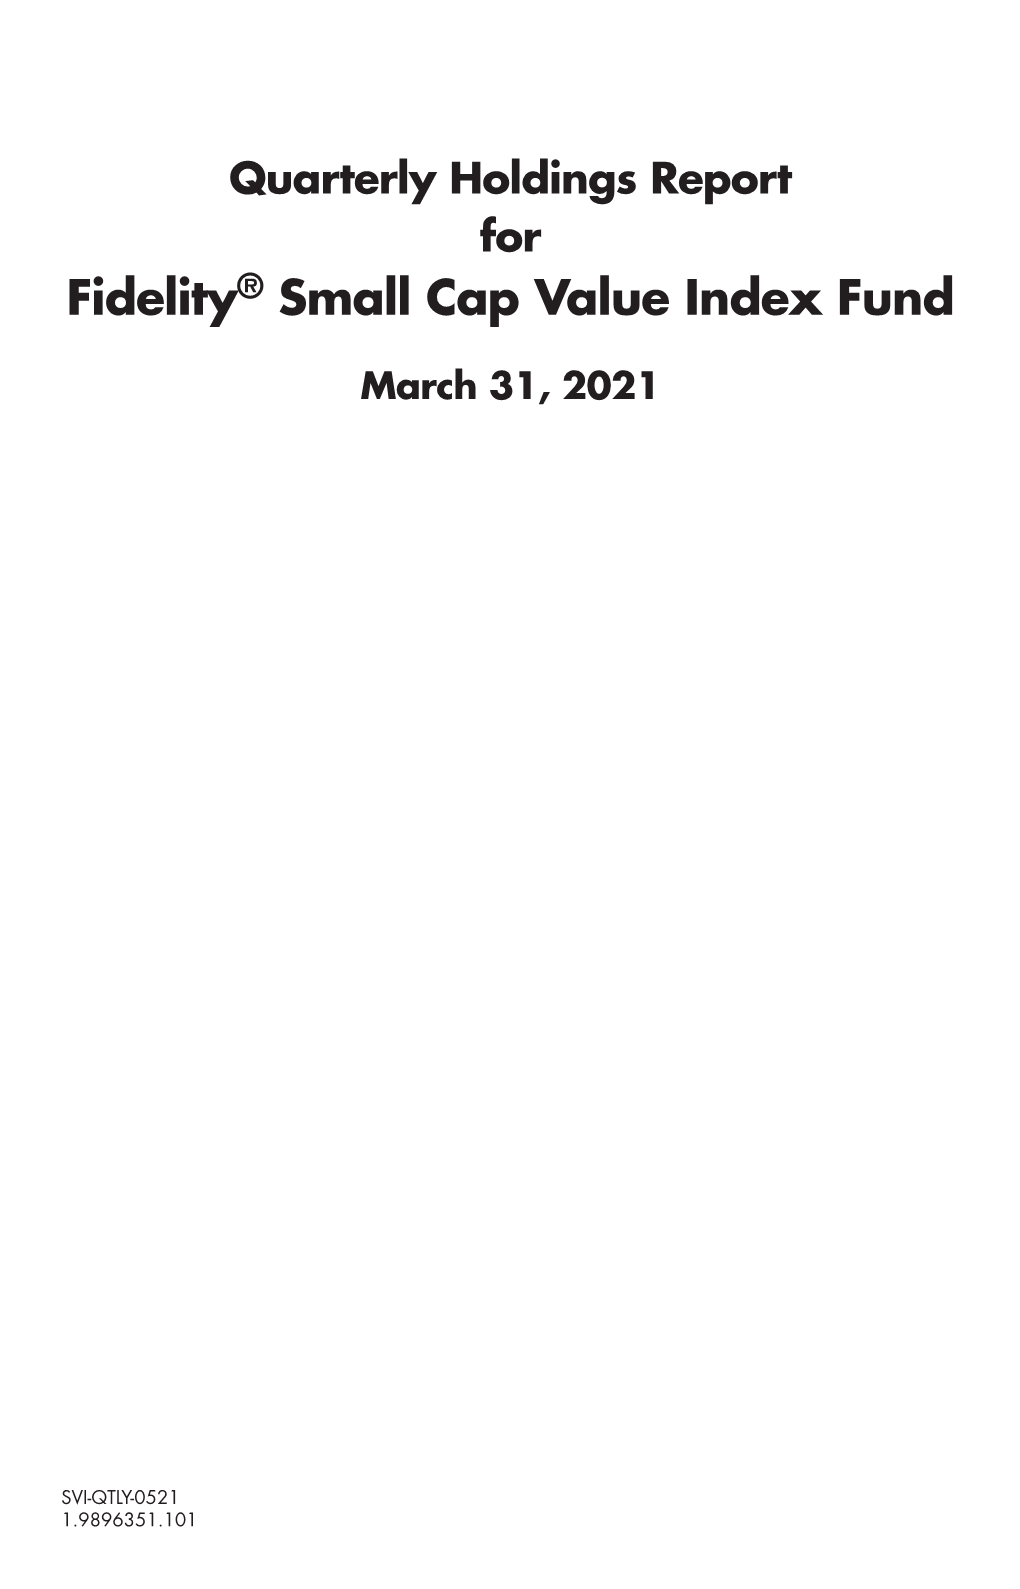 Fidelity® Small Cap Value Index Fund